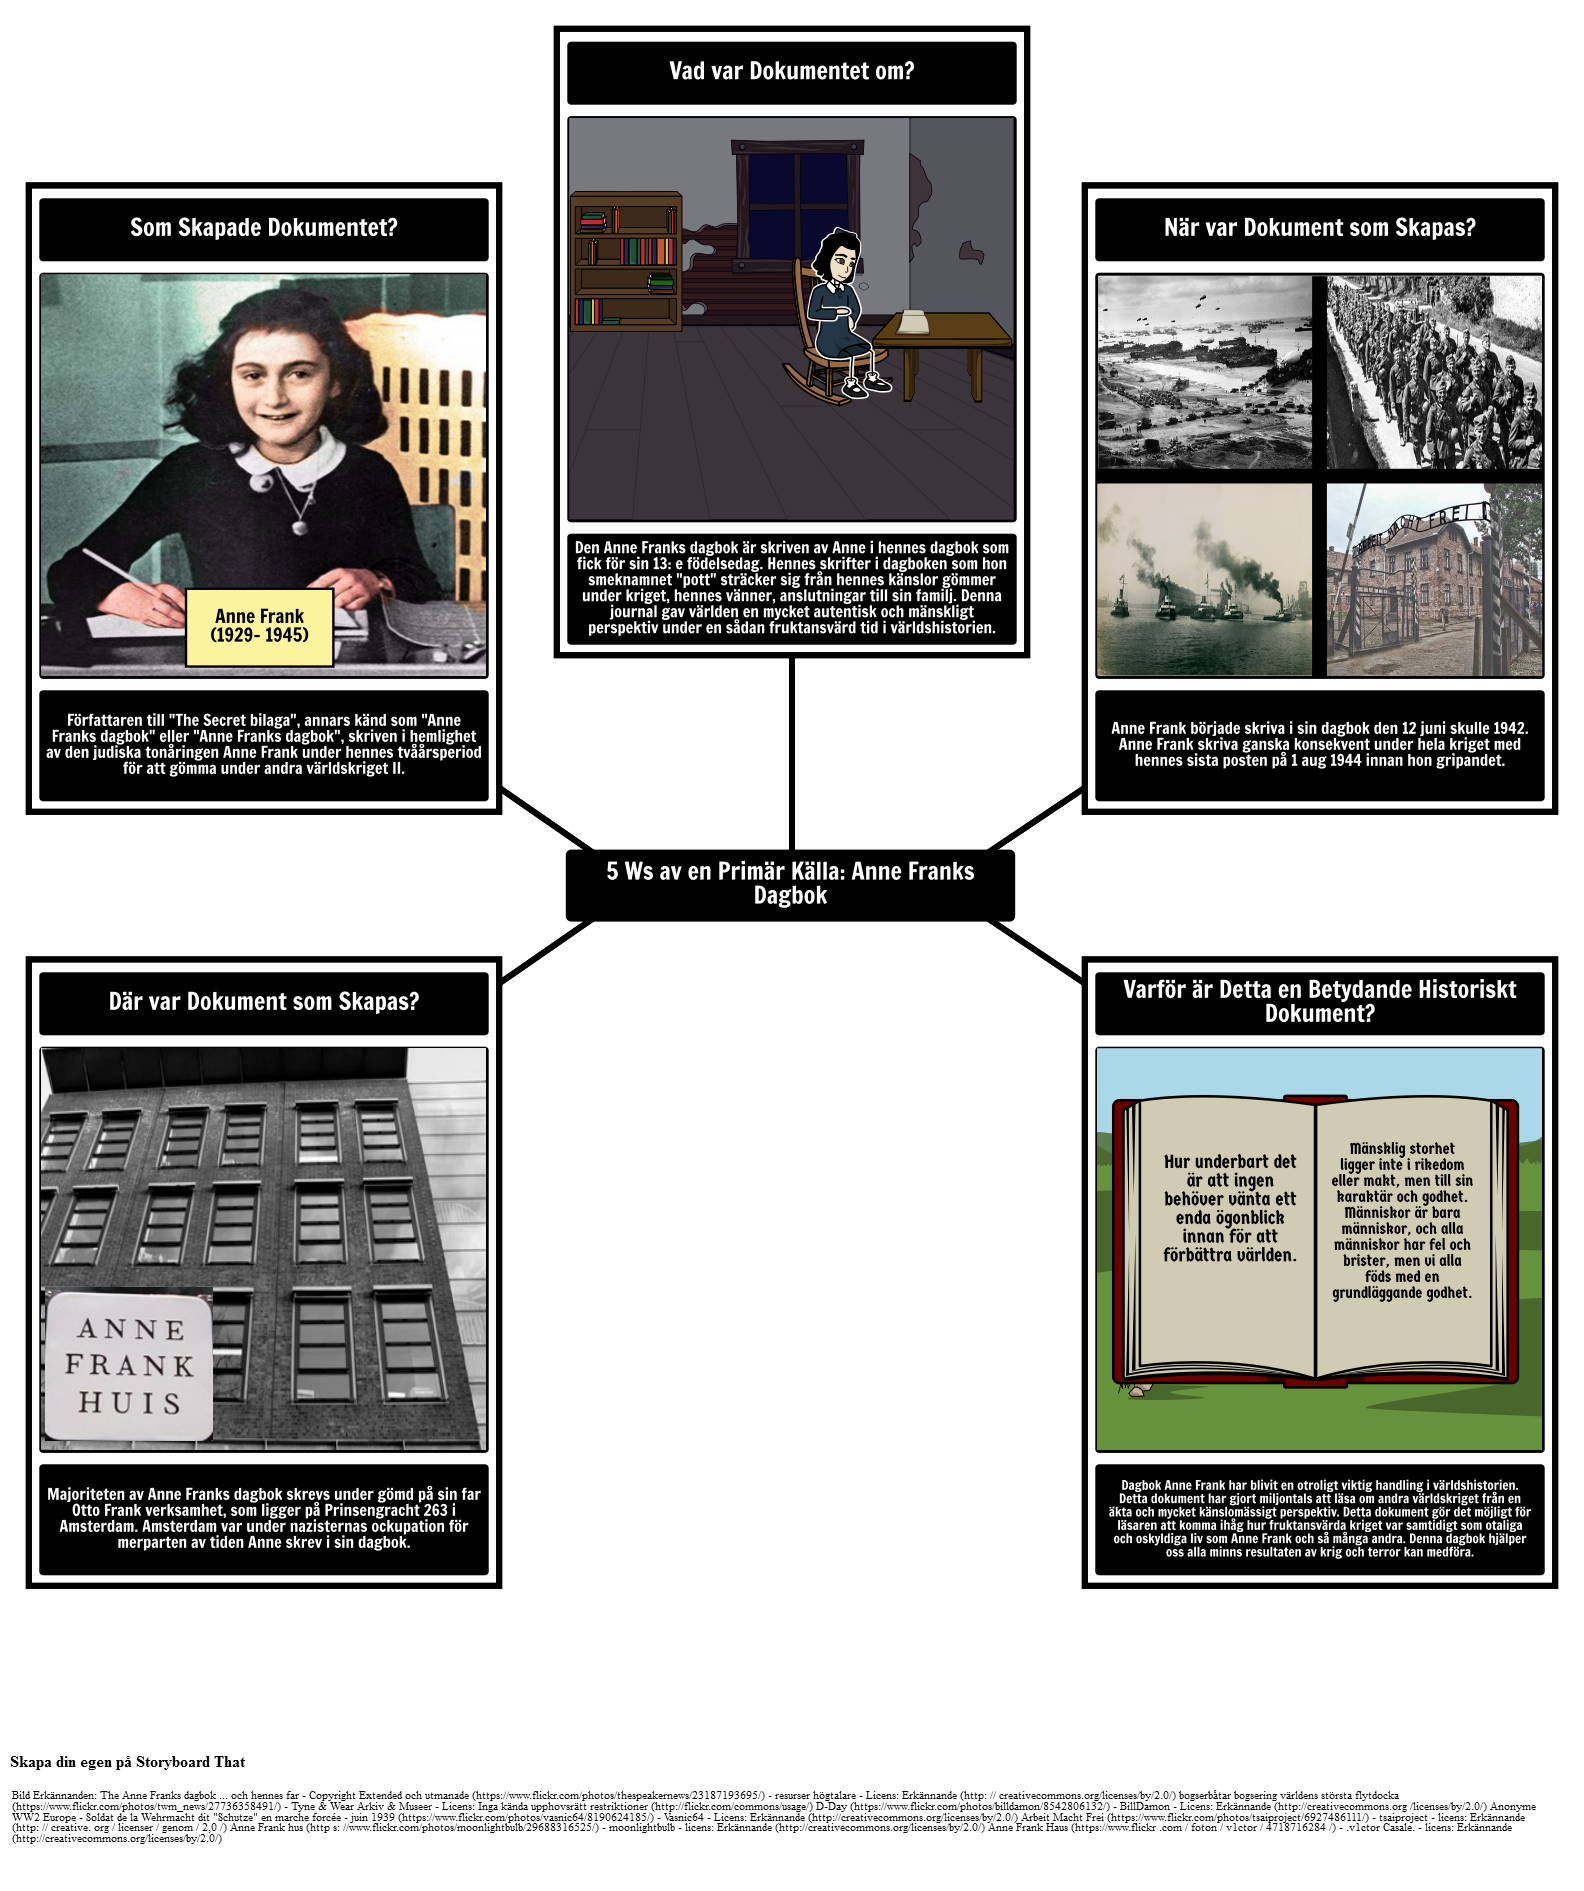 Primär Källa 5Ws: The Diary of Anne Frank